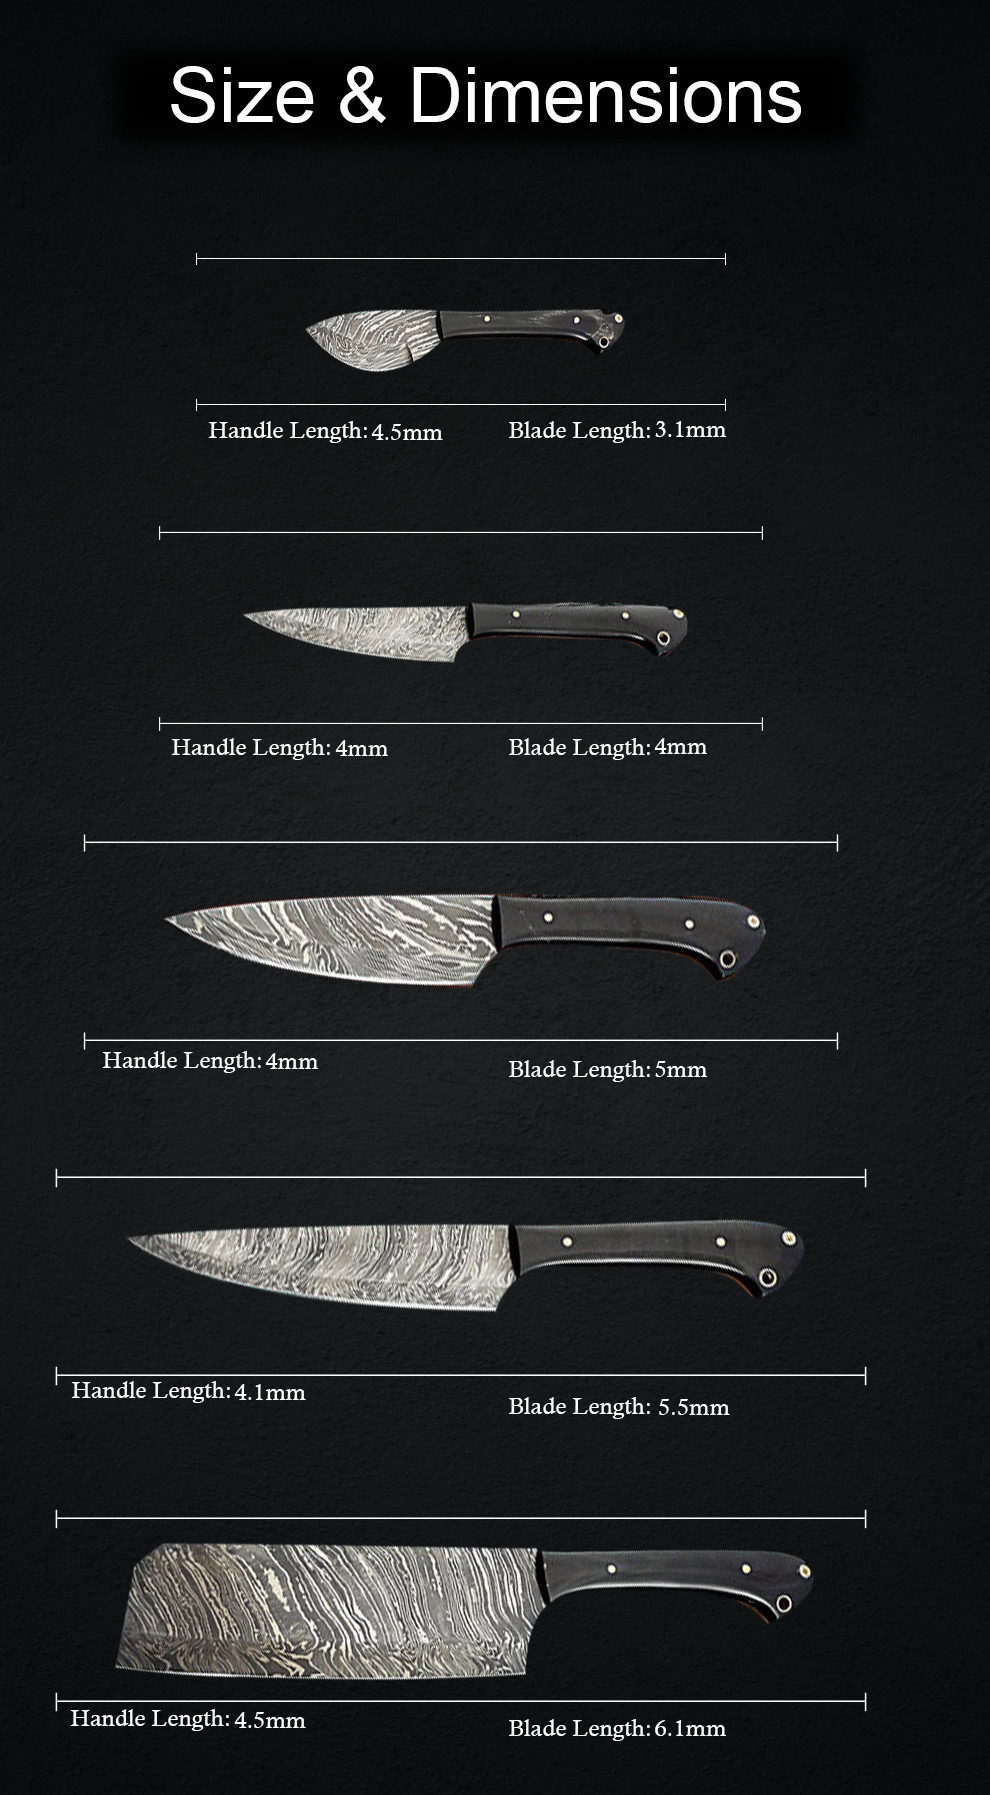 Damascus Steel Handmade Kitchen Knives